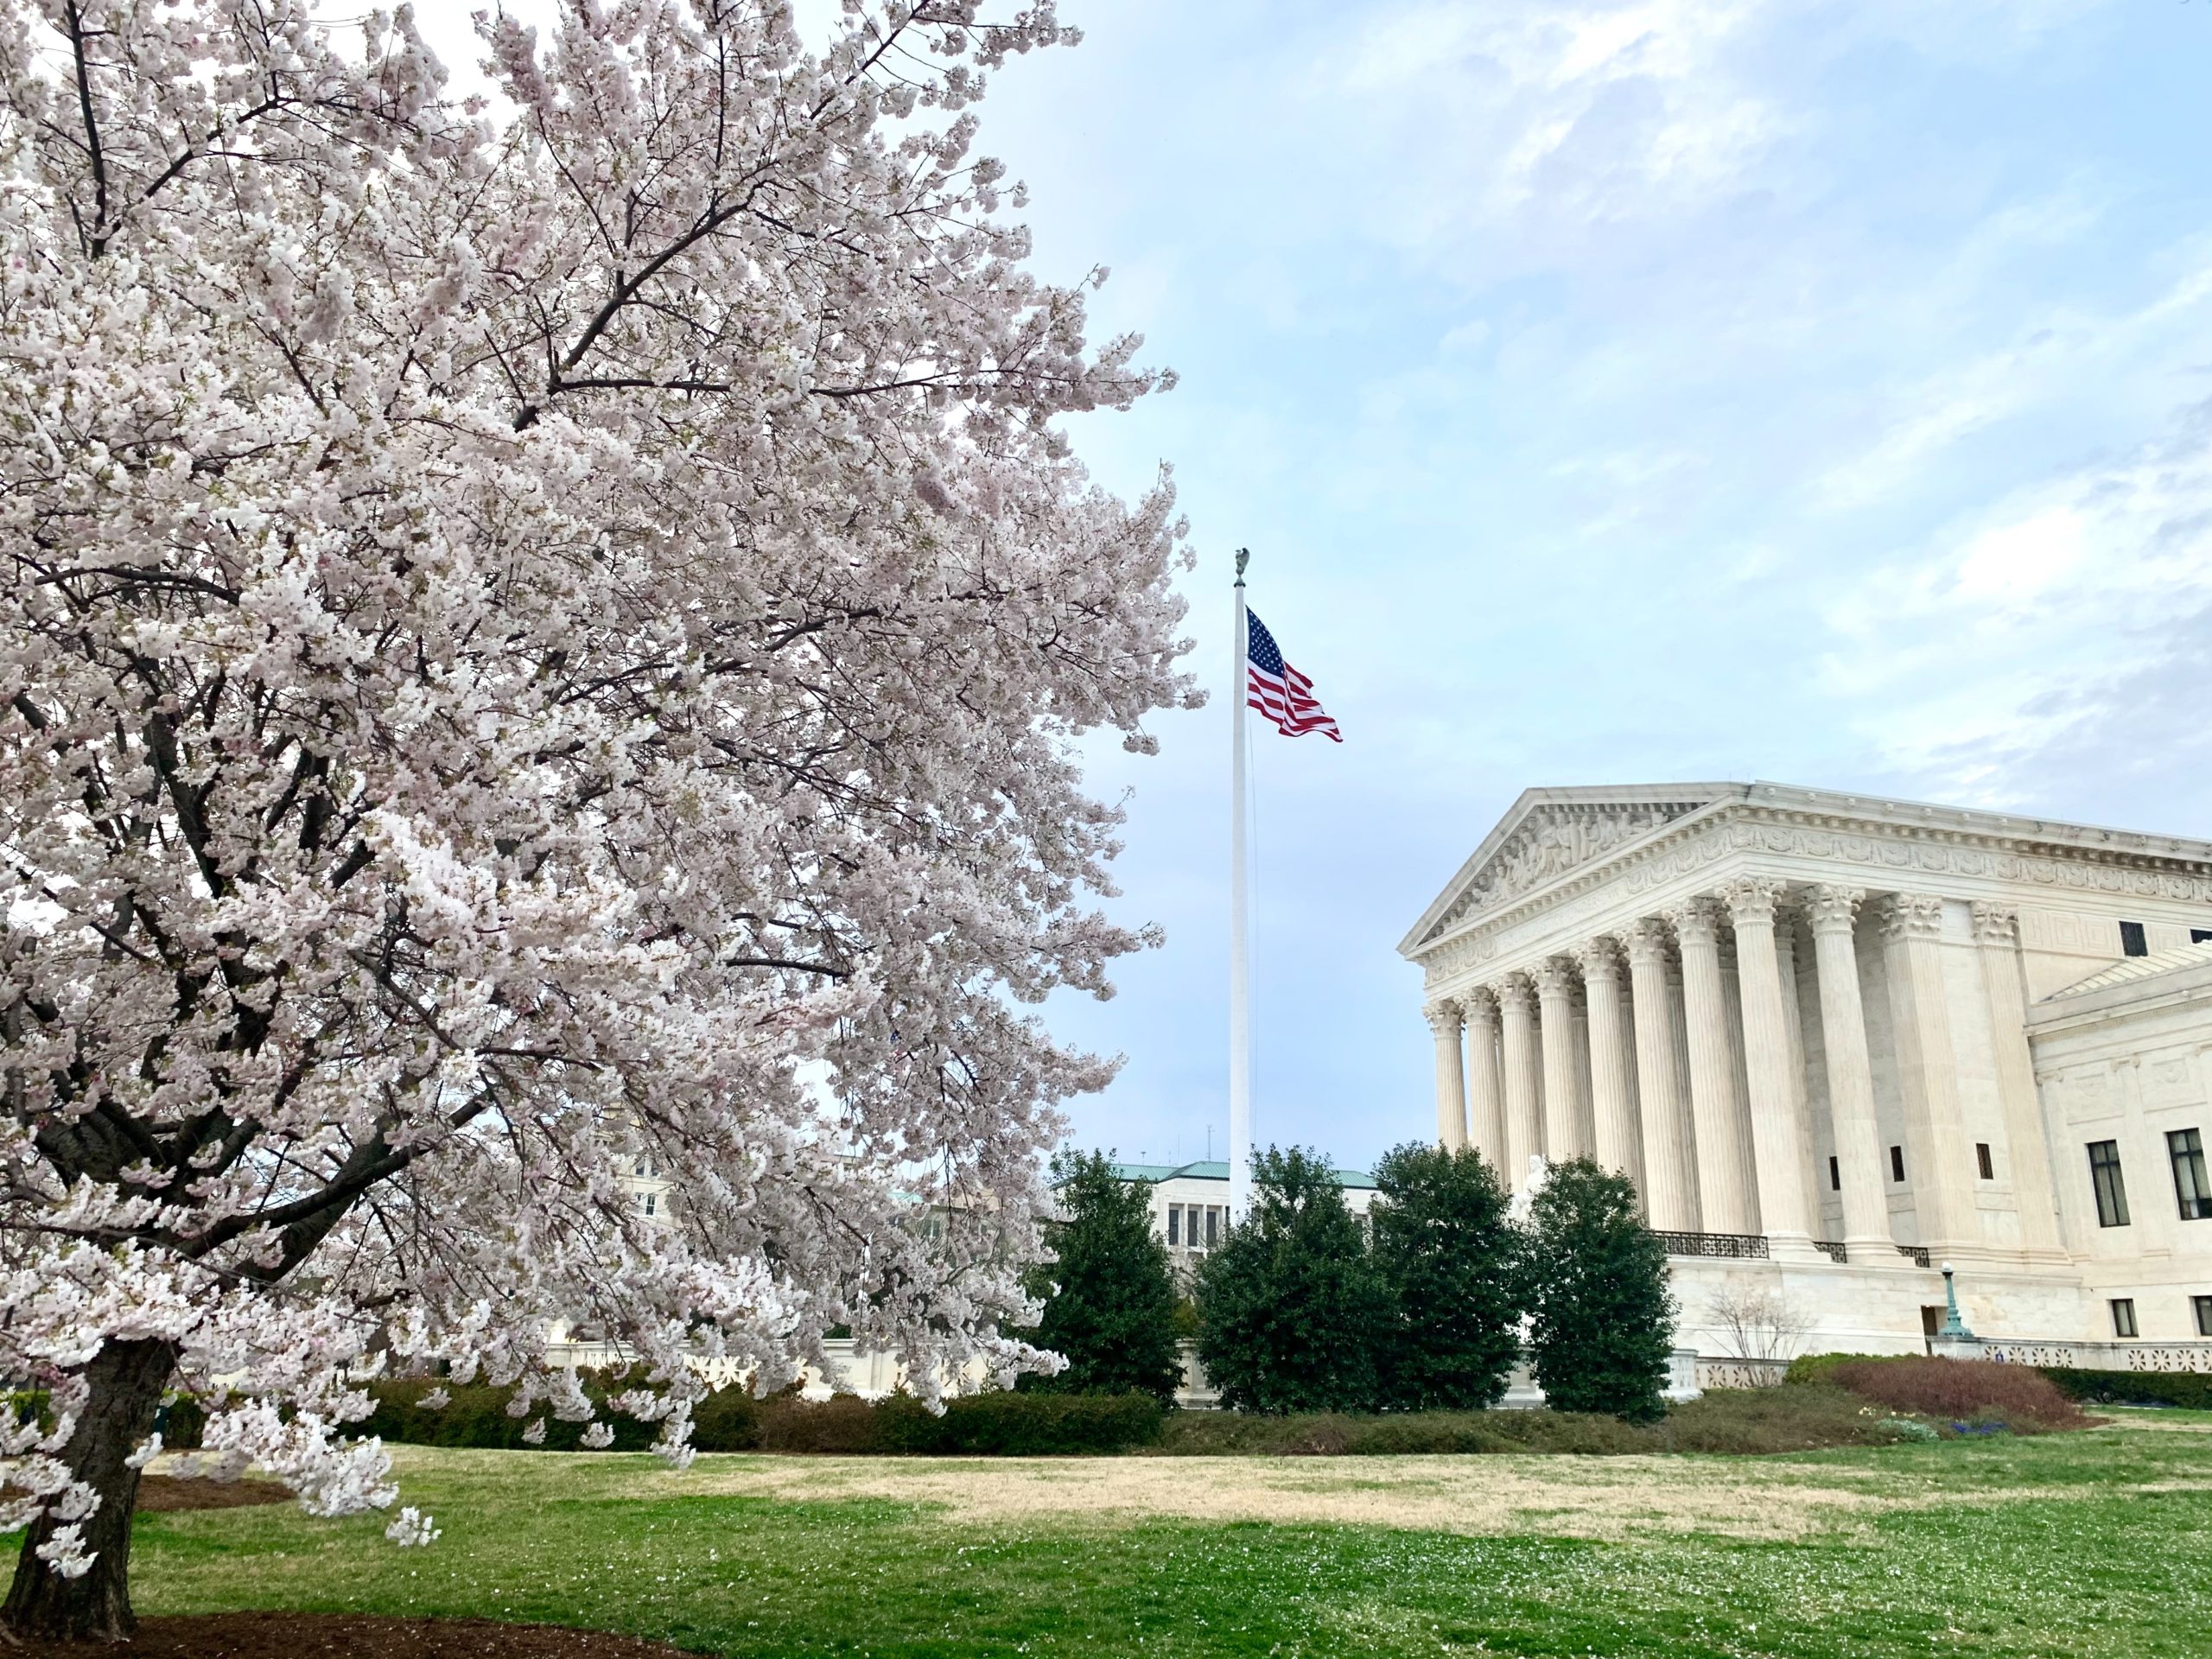 The Supreme Court of the United States - Washington, D.C.